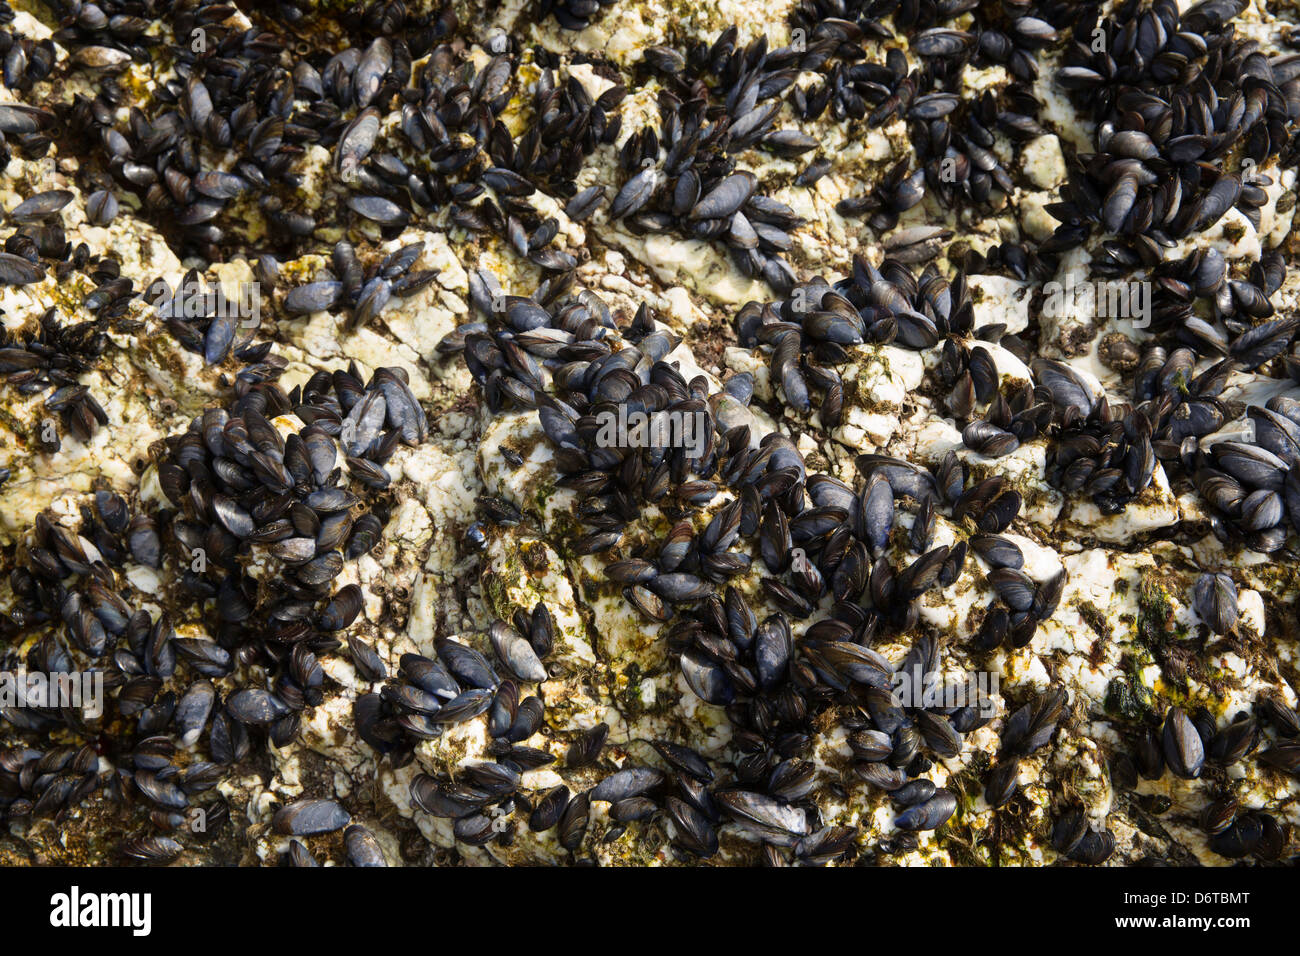 Mussels Cornwall uk Stock Photo